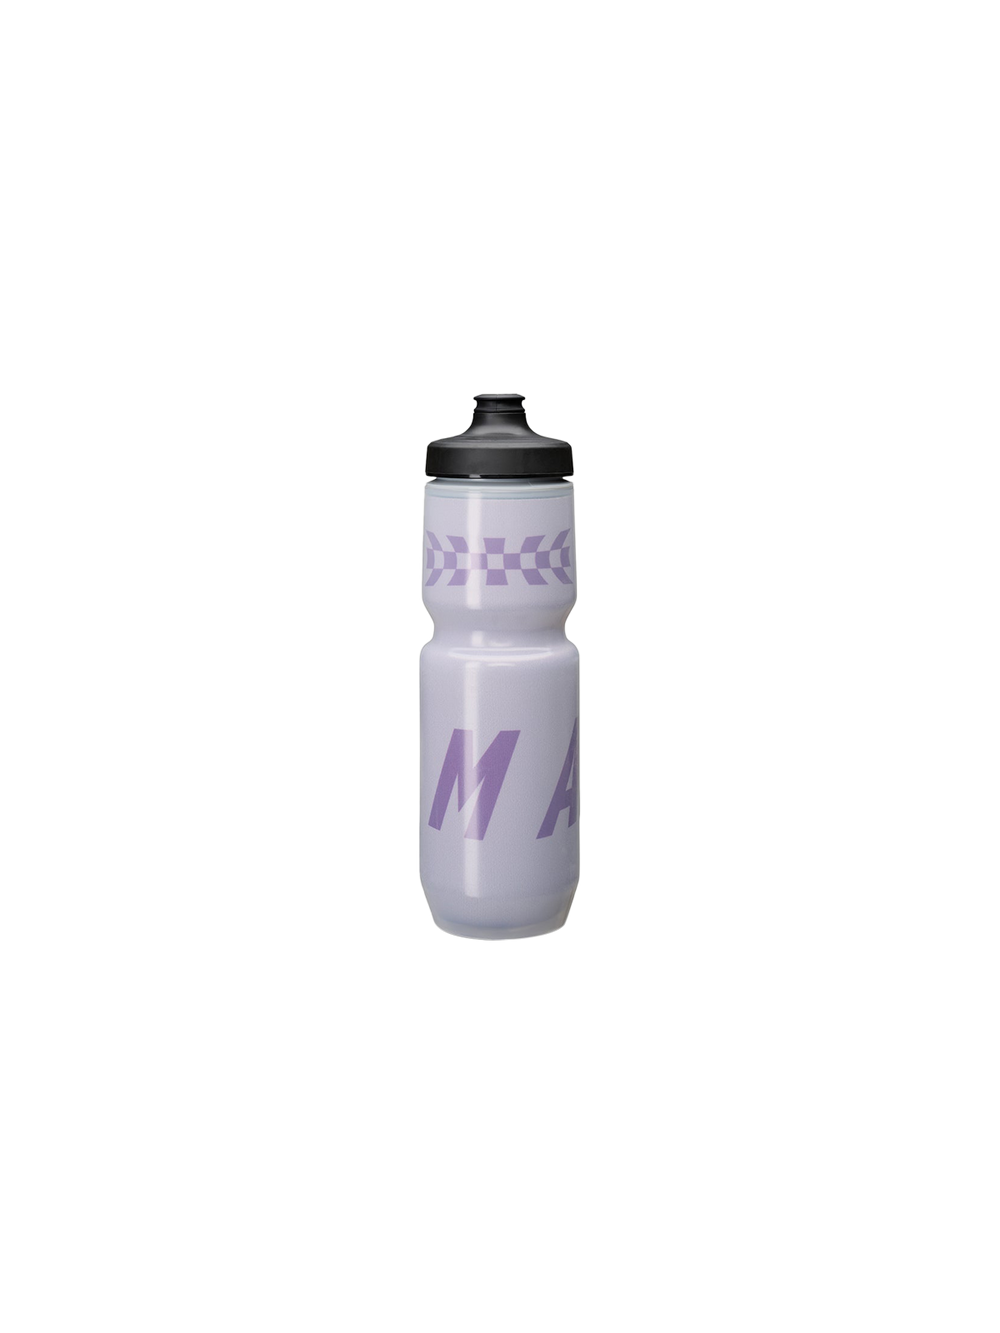 Product Image for Chromatek Insulated Bottle